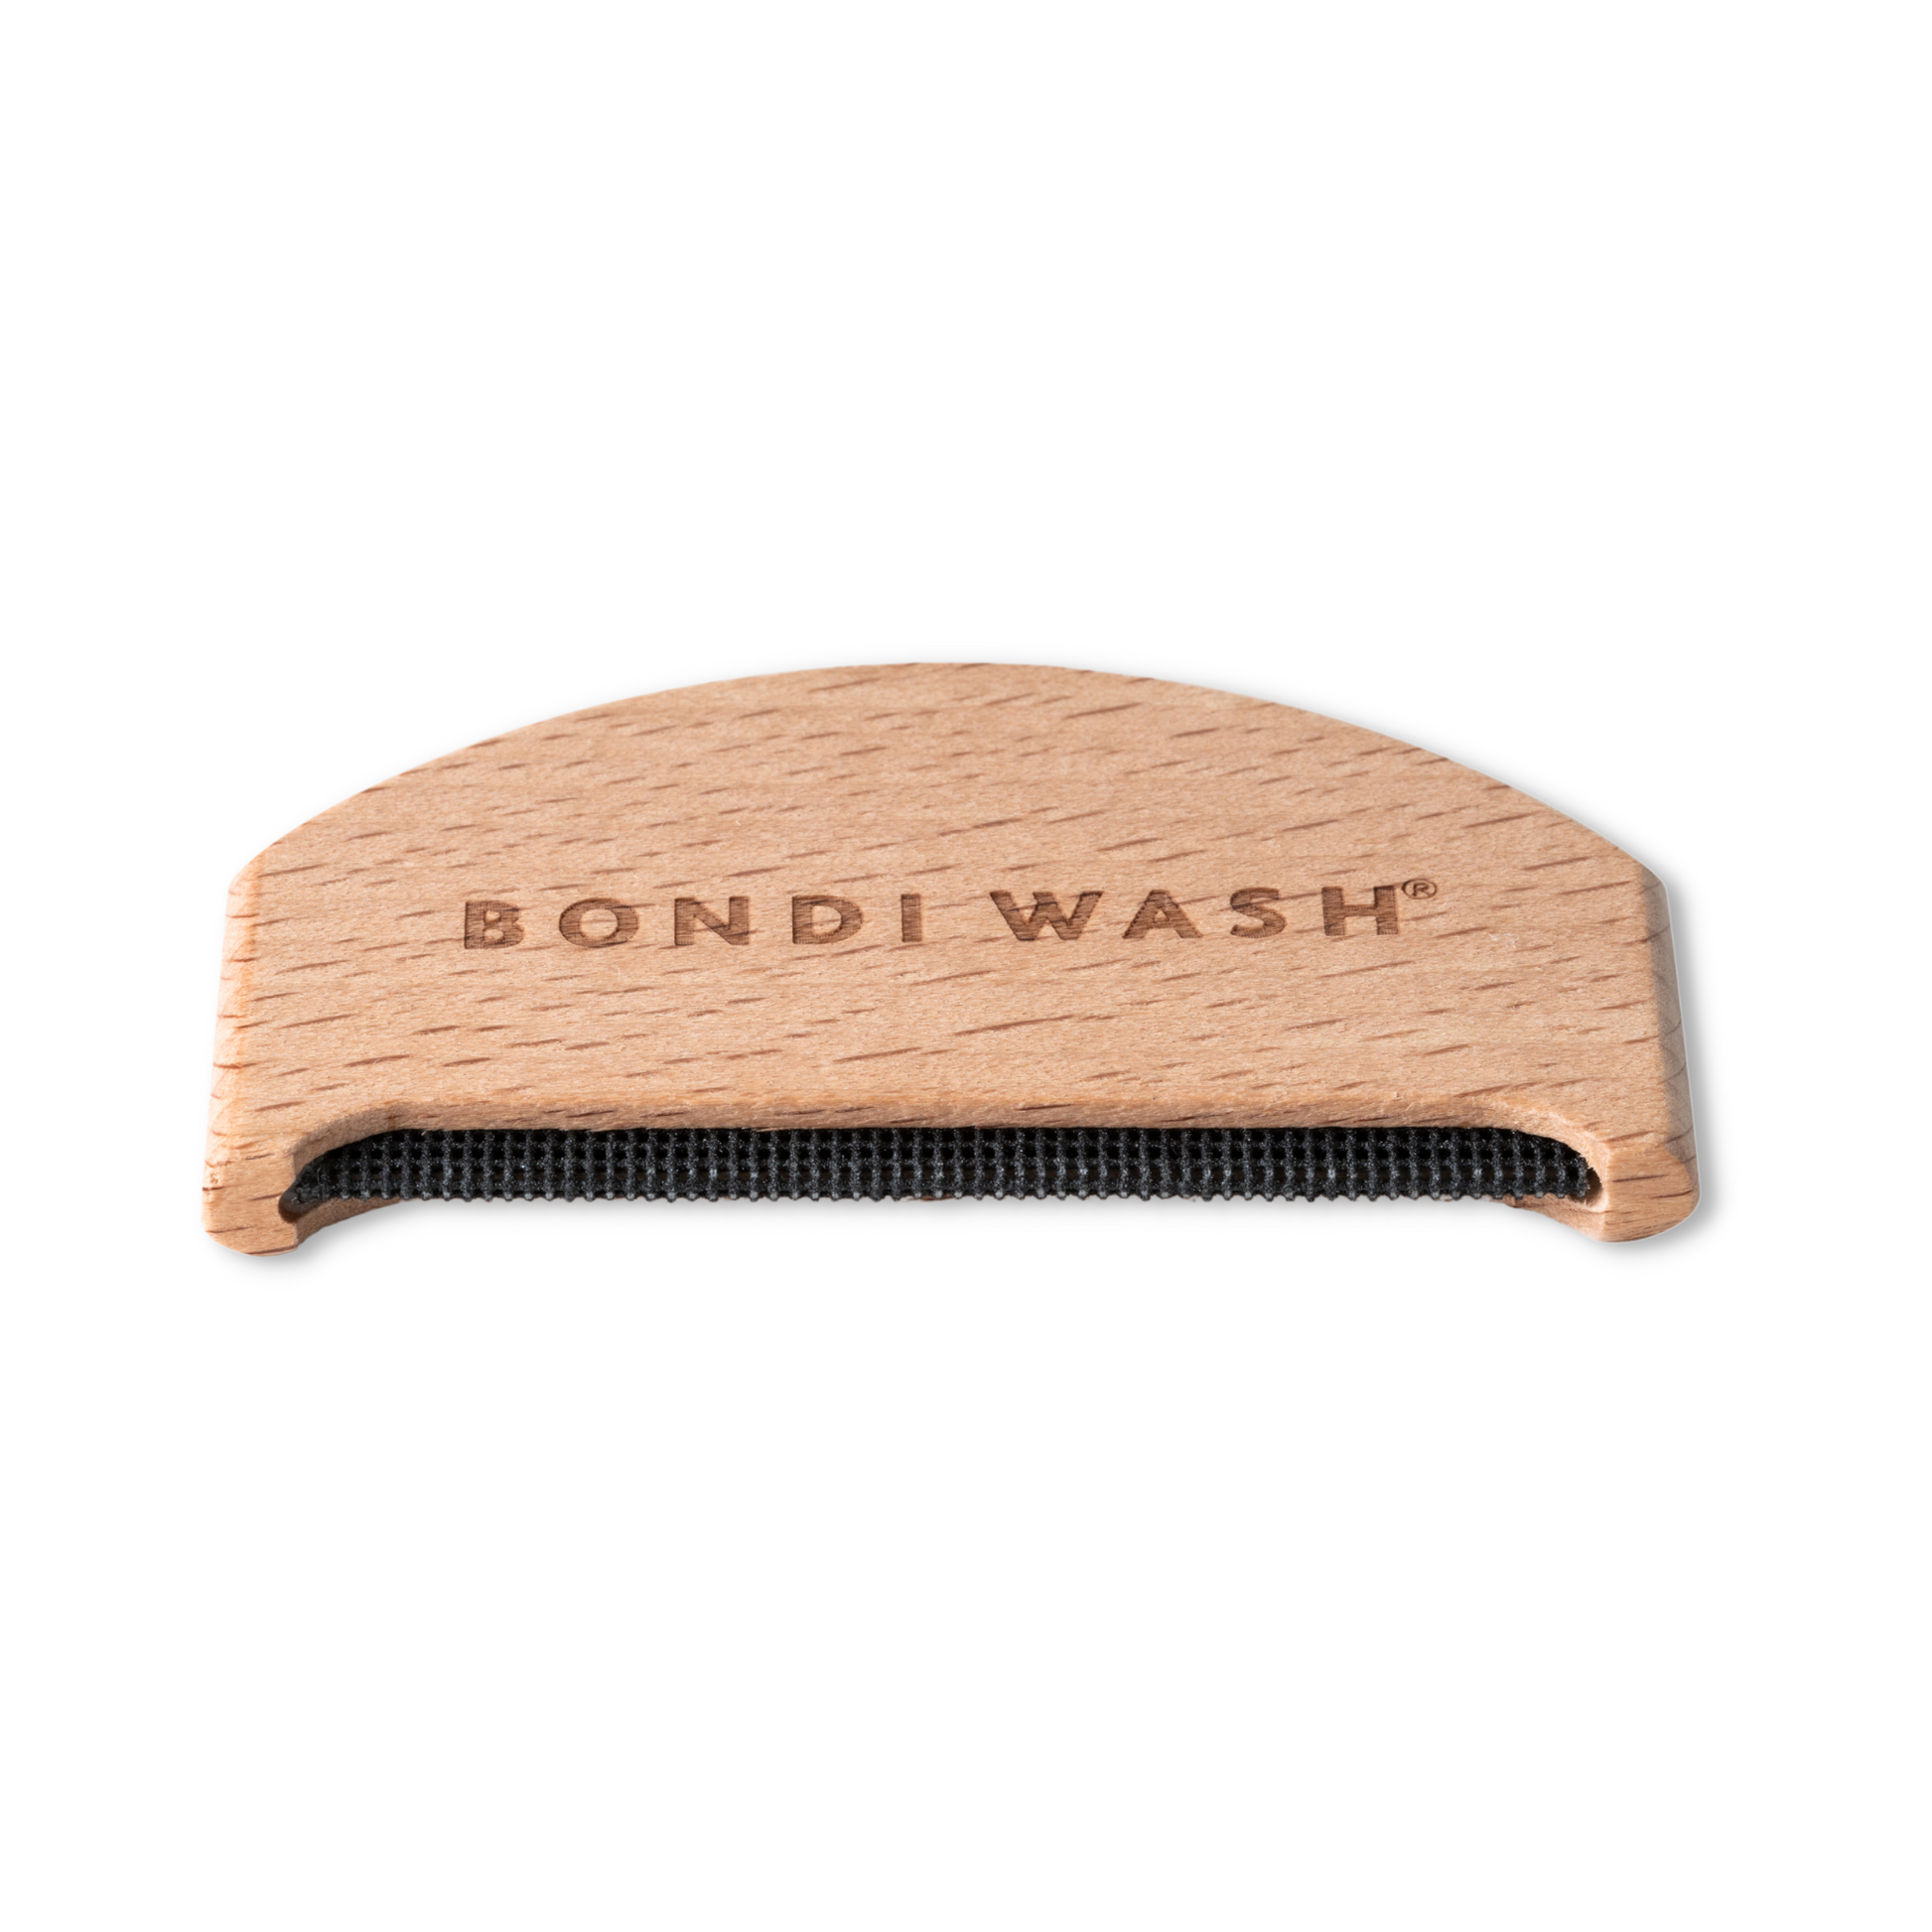 Bondi Wash Cashmere Comb